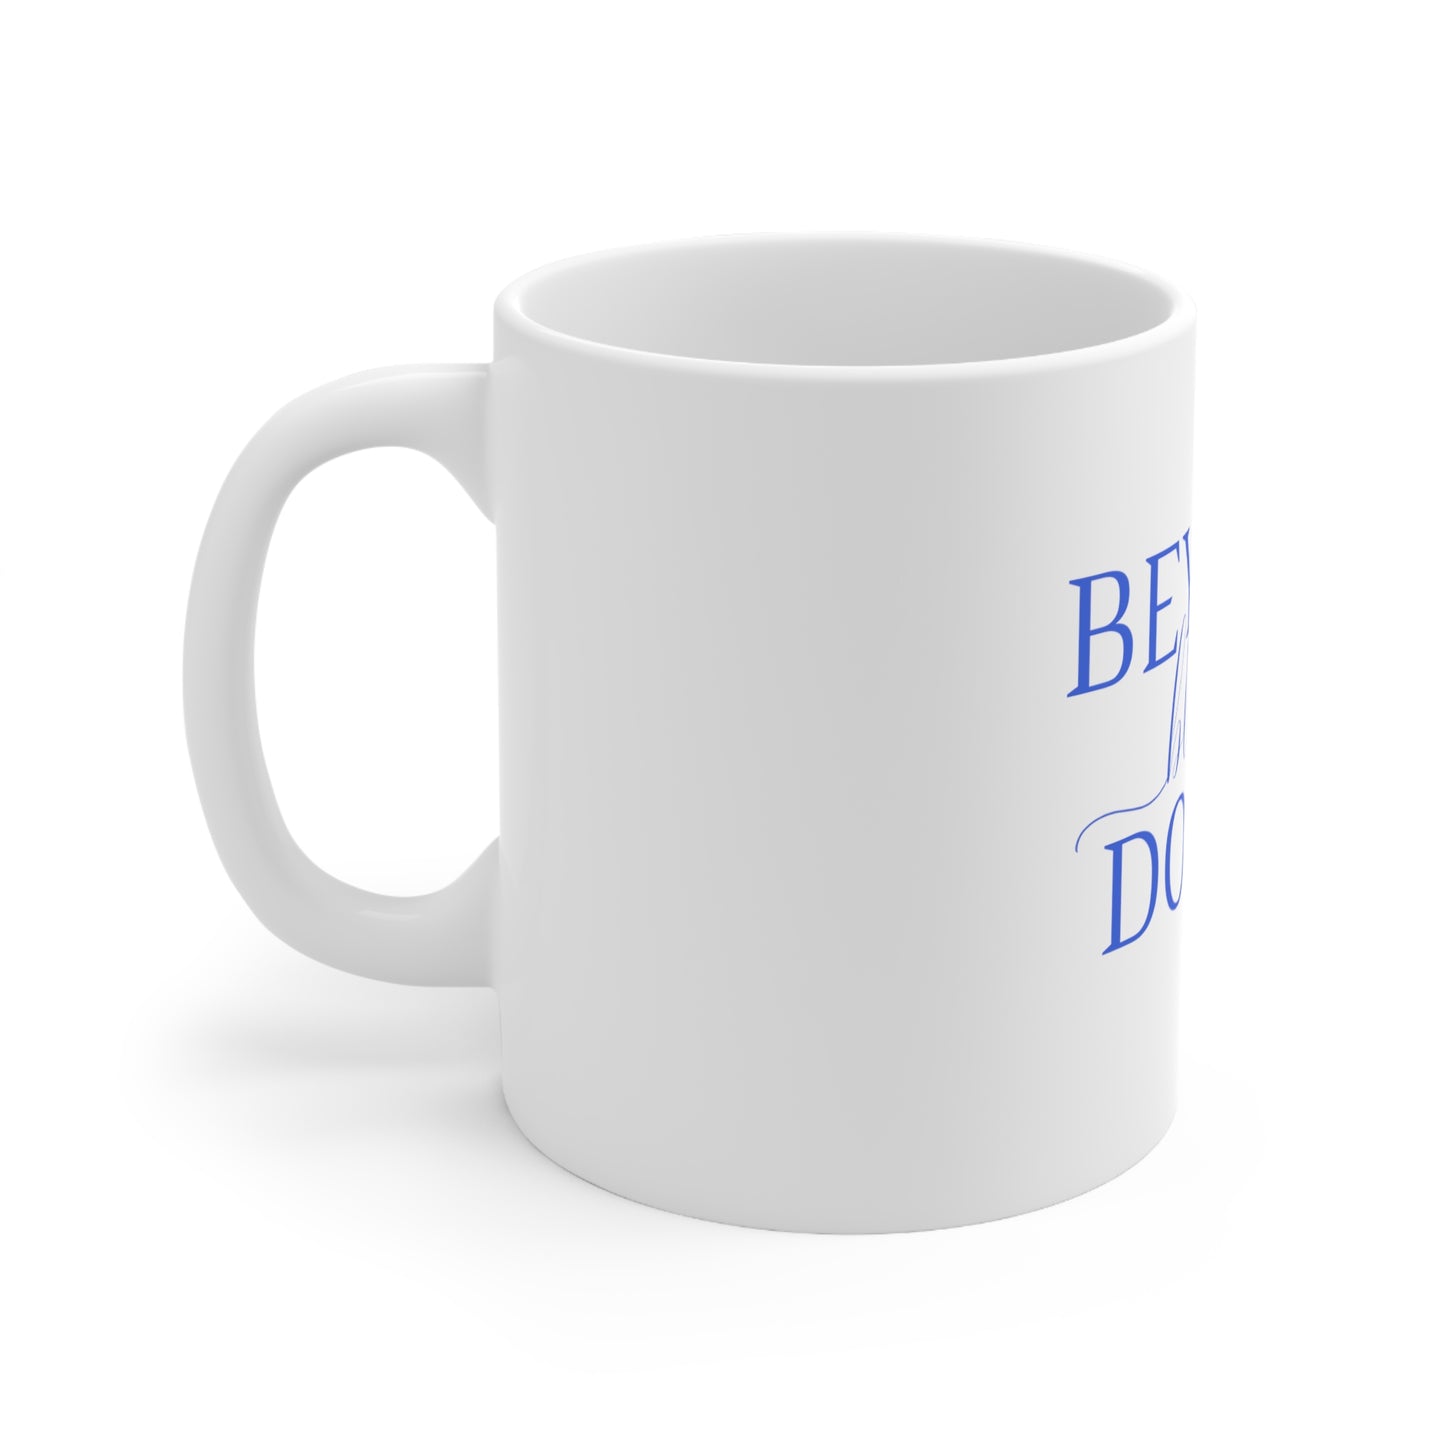 Beyond Blessed Doula - Plain Ceramic Mug 11oz